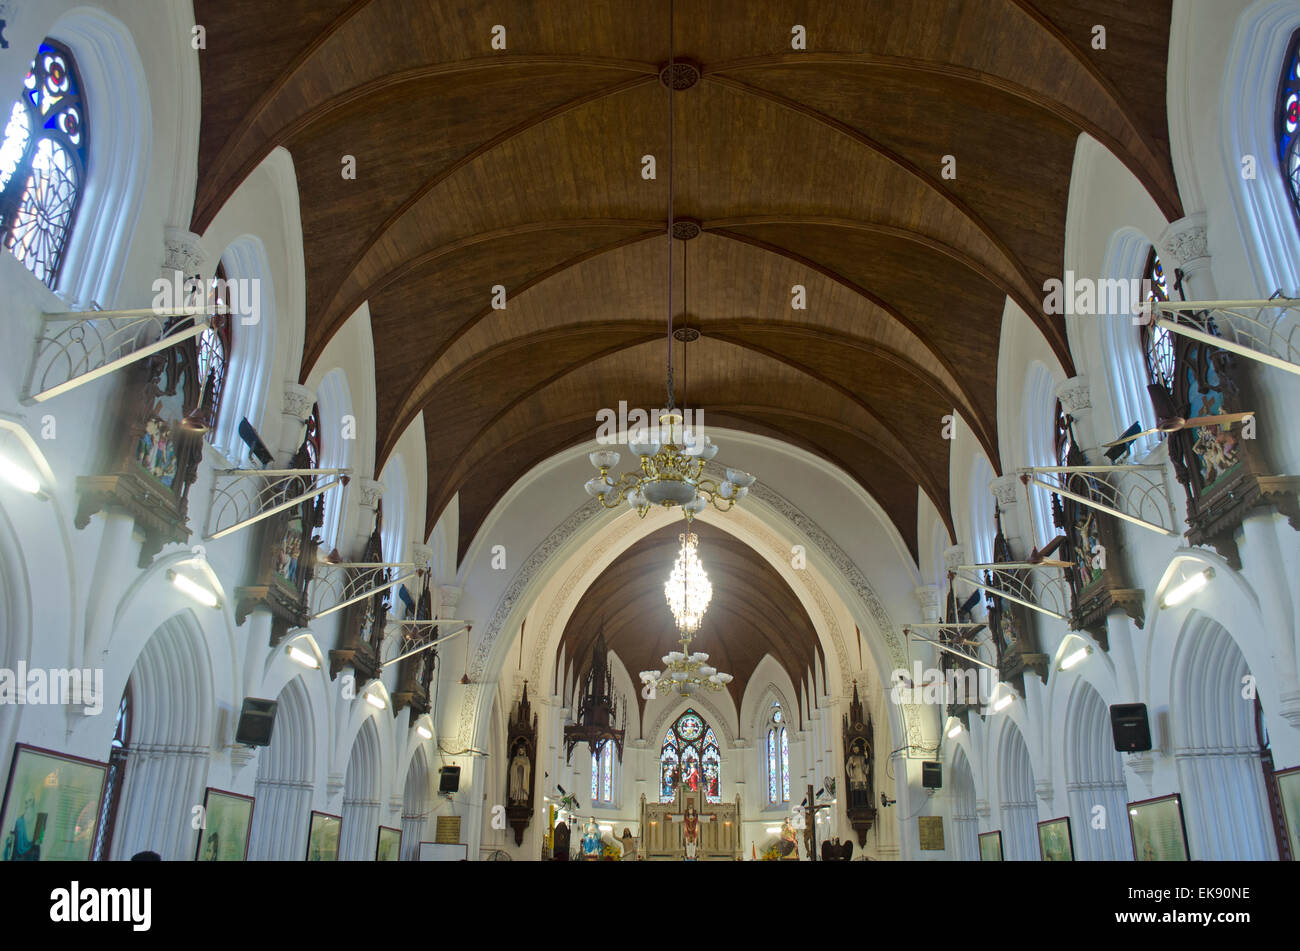 Interiors of Santhome cathedral Basilica church in Chennai,Tamil Nadu,India Stock Photo